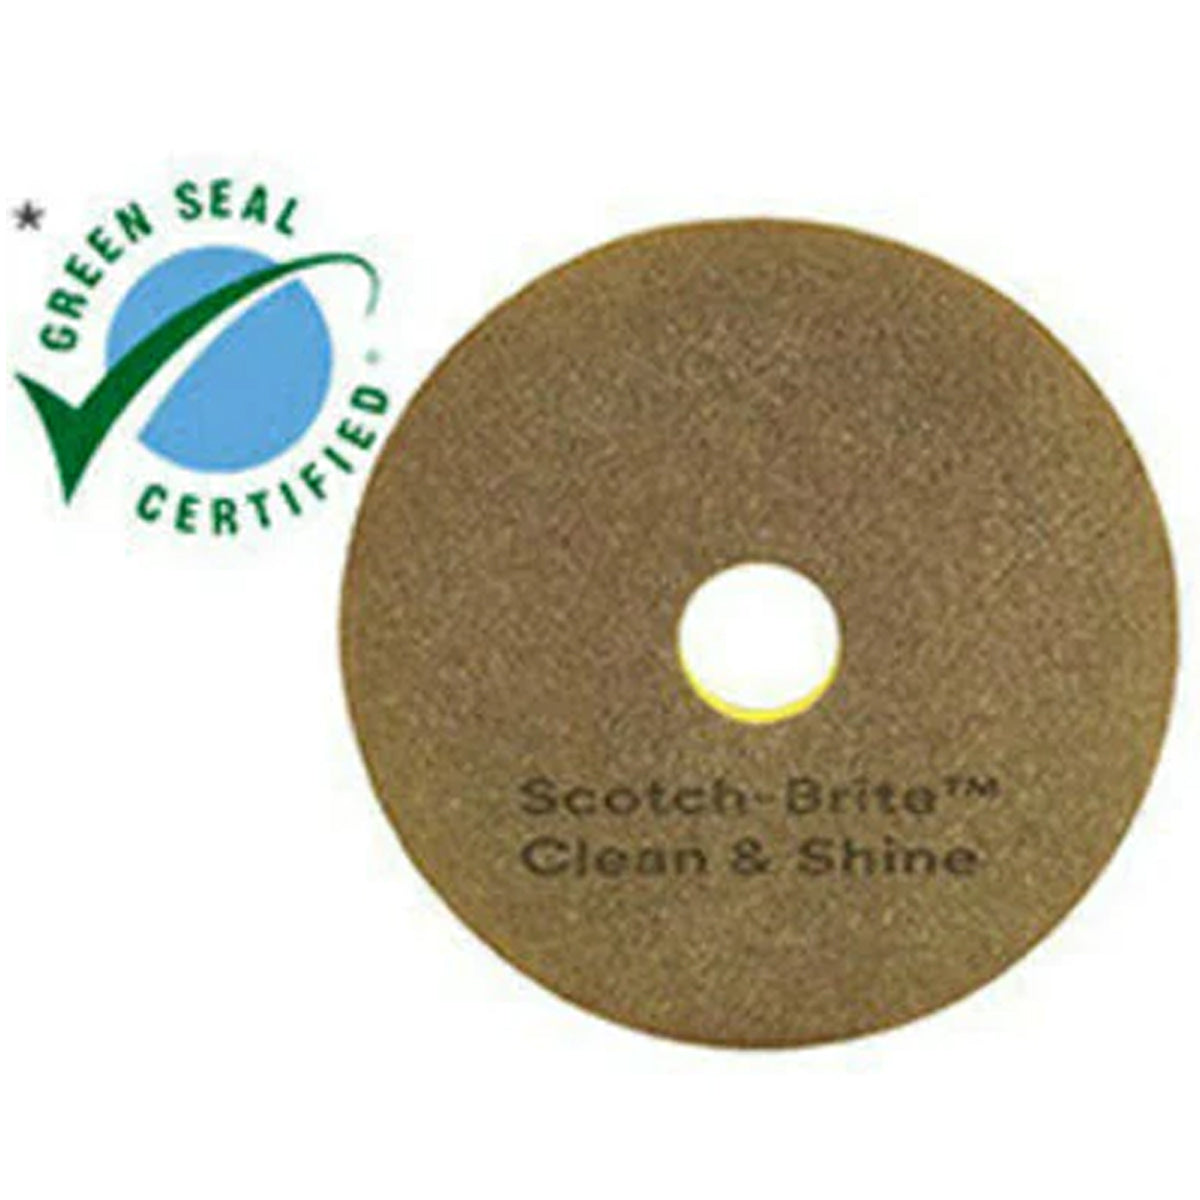 Disco de Limpieza para Piso Scotch-Brite Clean & Shine, 35.5 cm, 5/Caja